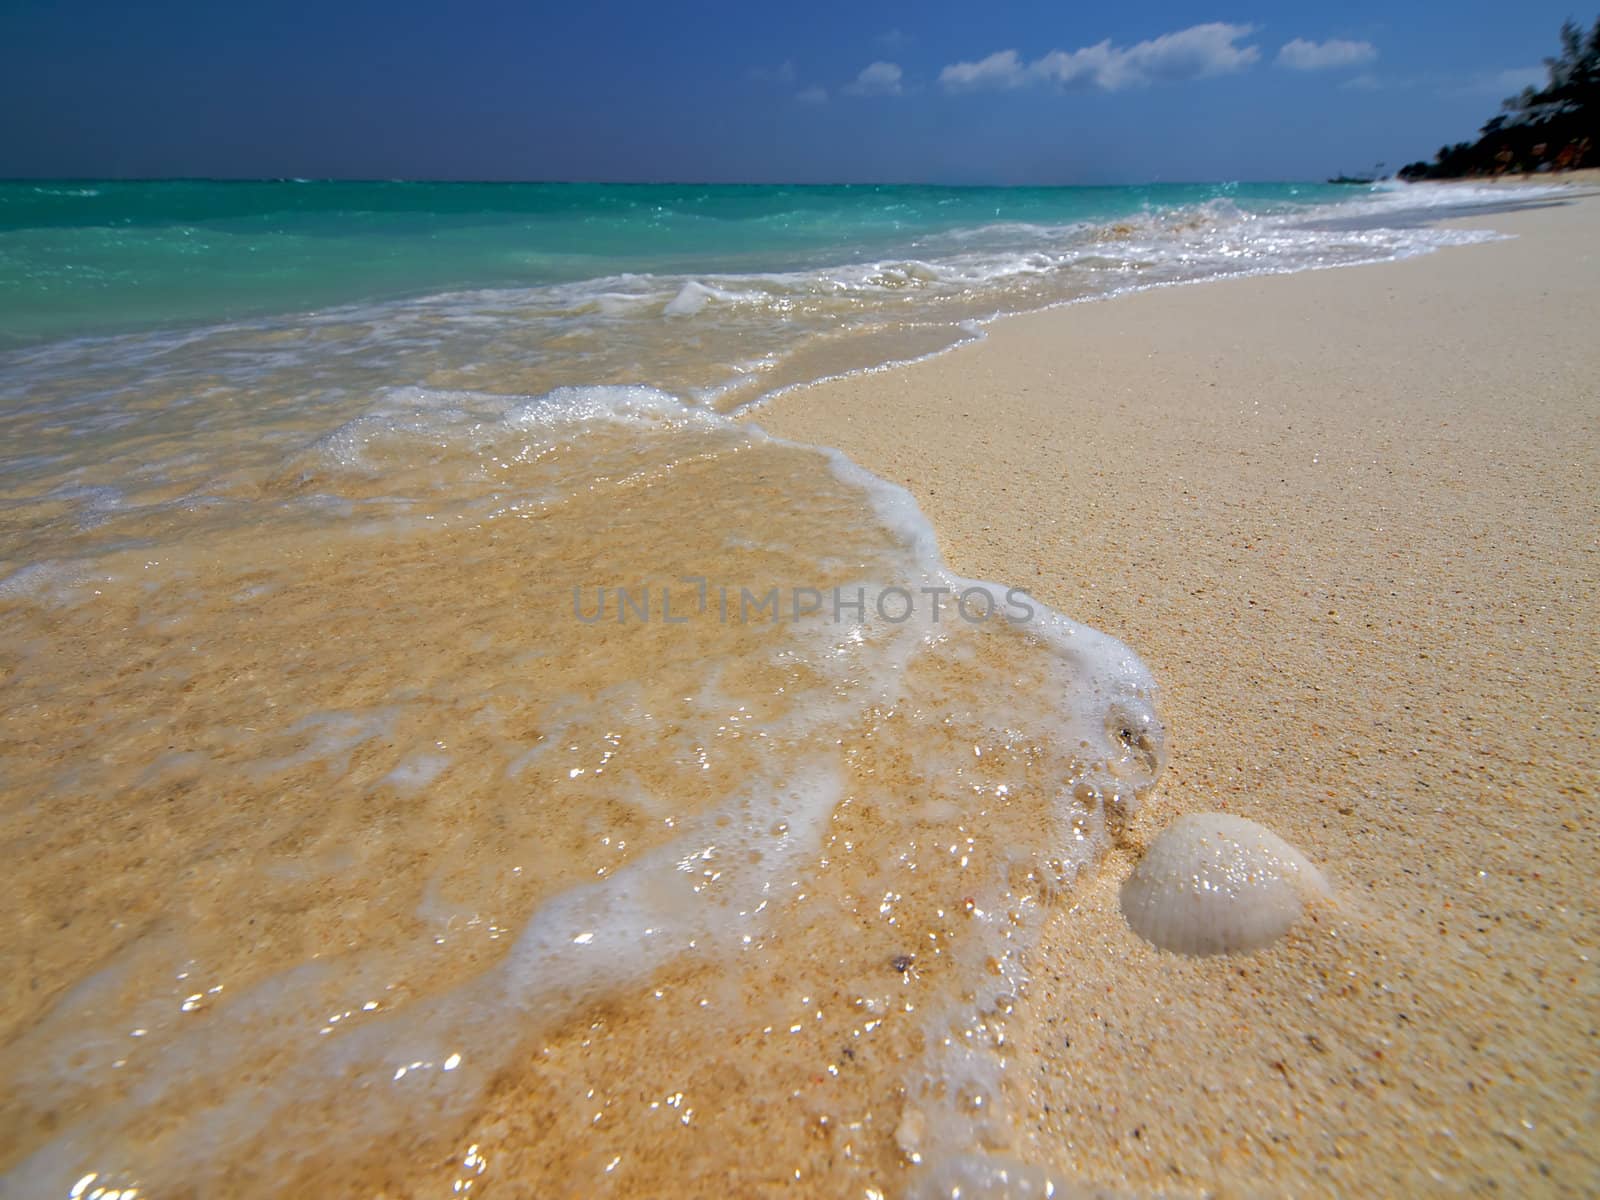 White shell on a sand beach. Wide angele shot